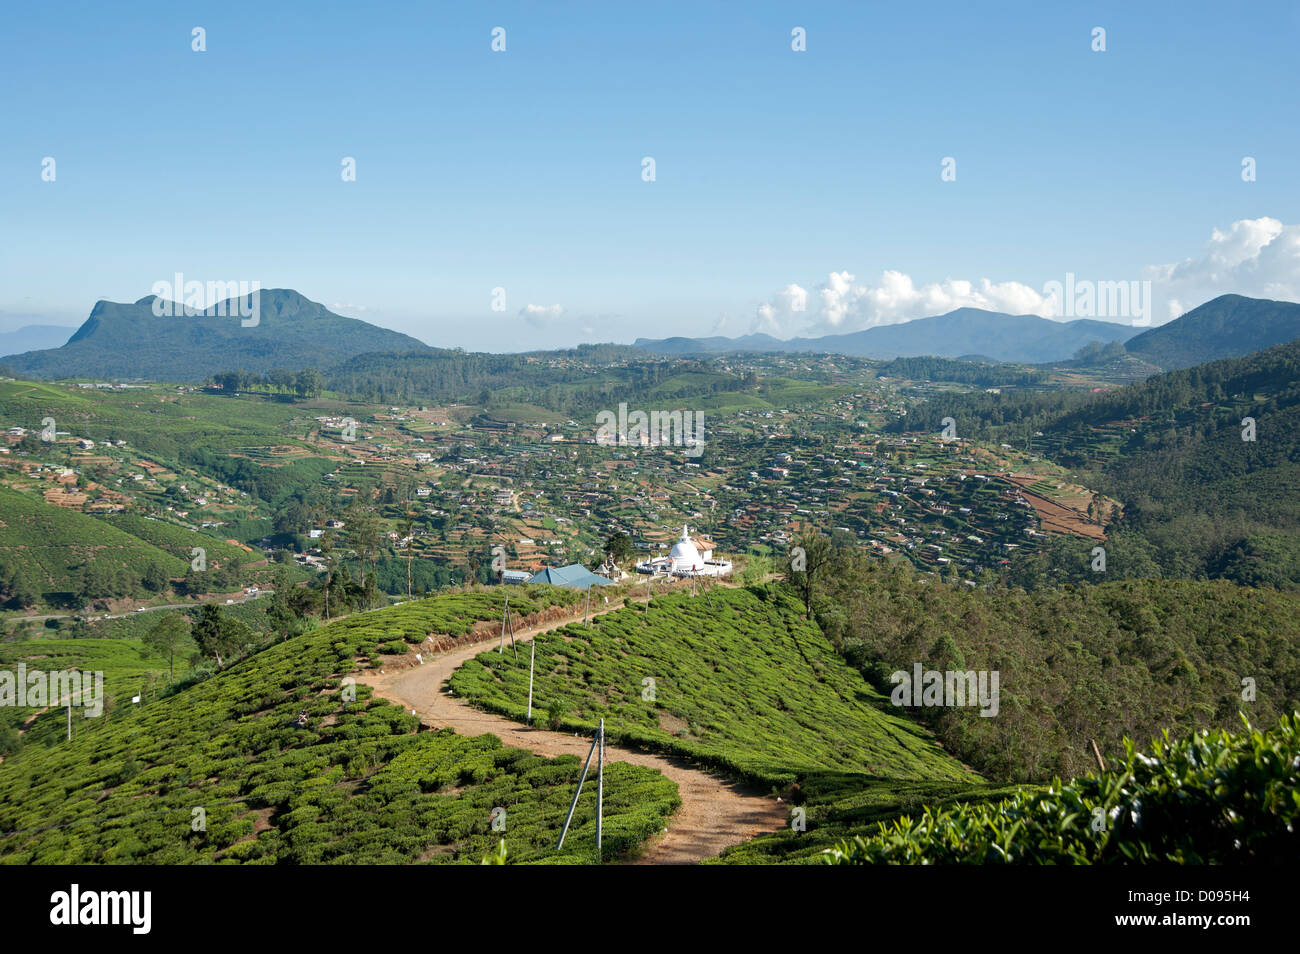 Pagoda and tea bushes in the mountains of Nuwara Eliya Sri Lanka Stock Photo